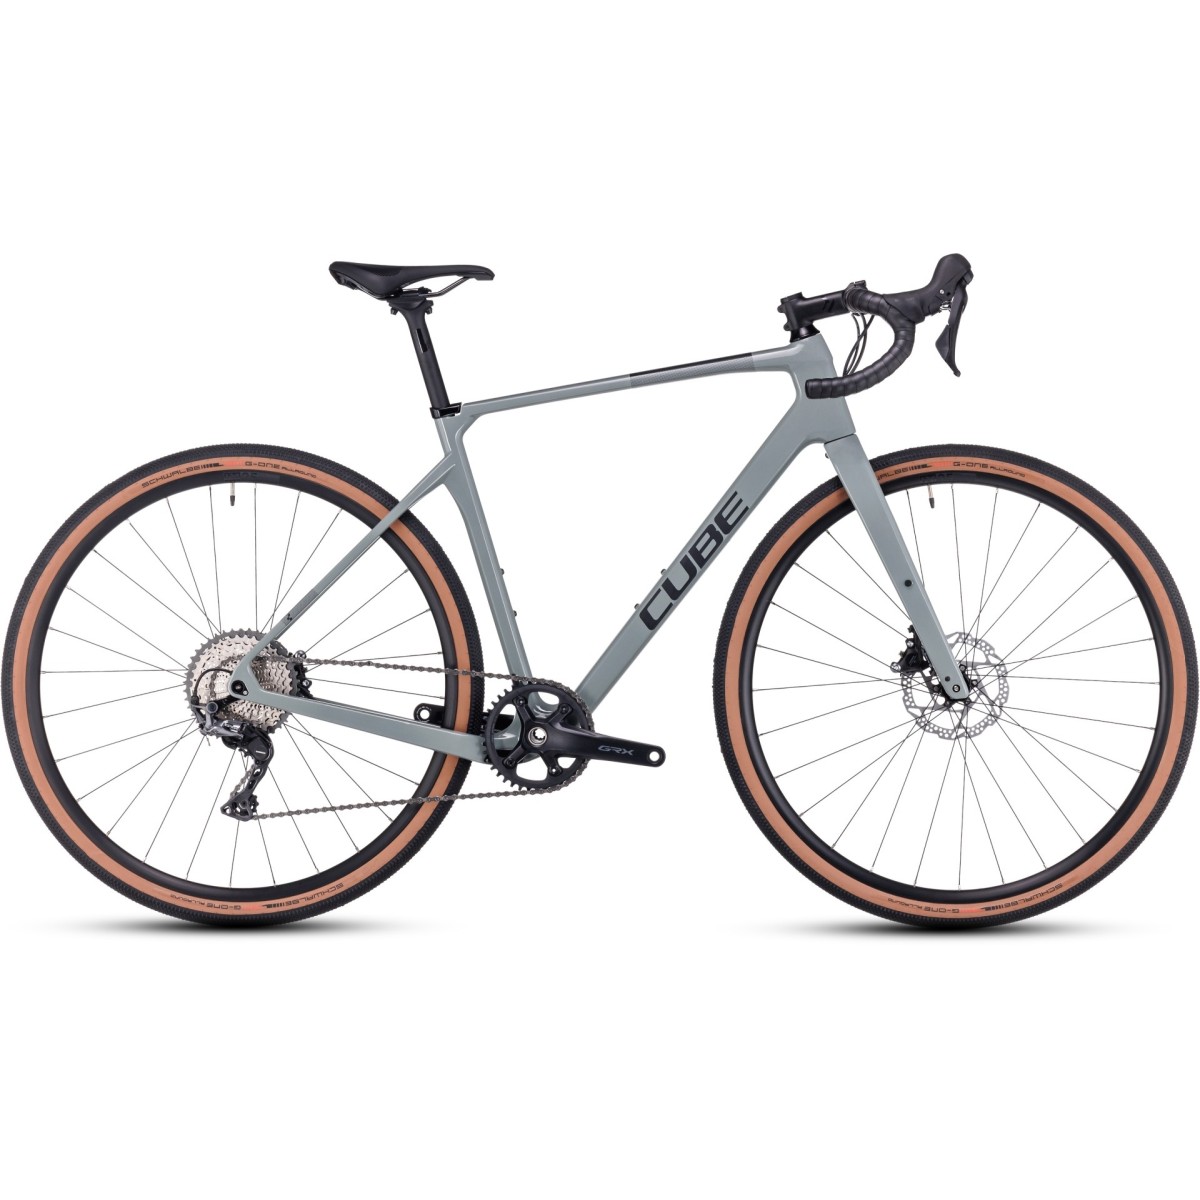 CUBE NUROAD C:62 PRO gravel velosipēds swampgrey/black - 2023